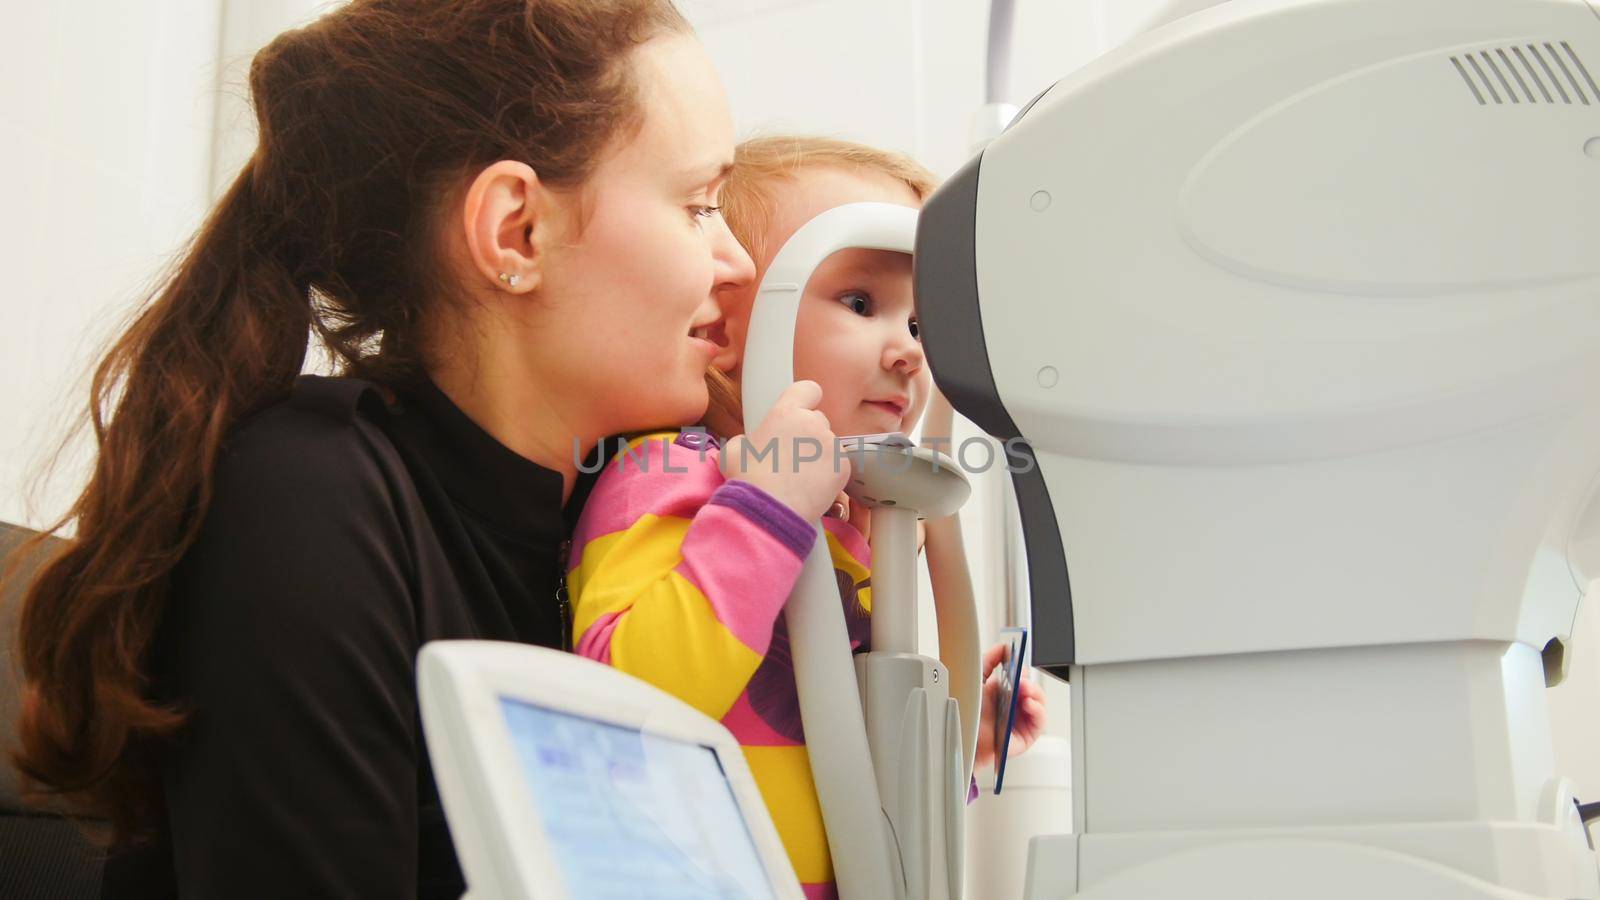 Children ophthalmology - optometrist Checks Child's Eye, horizontal